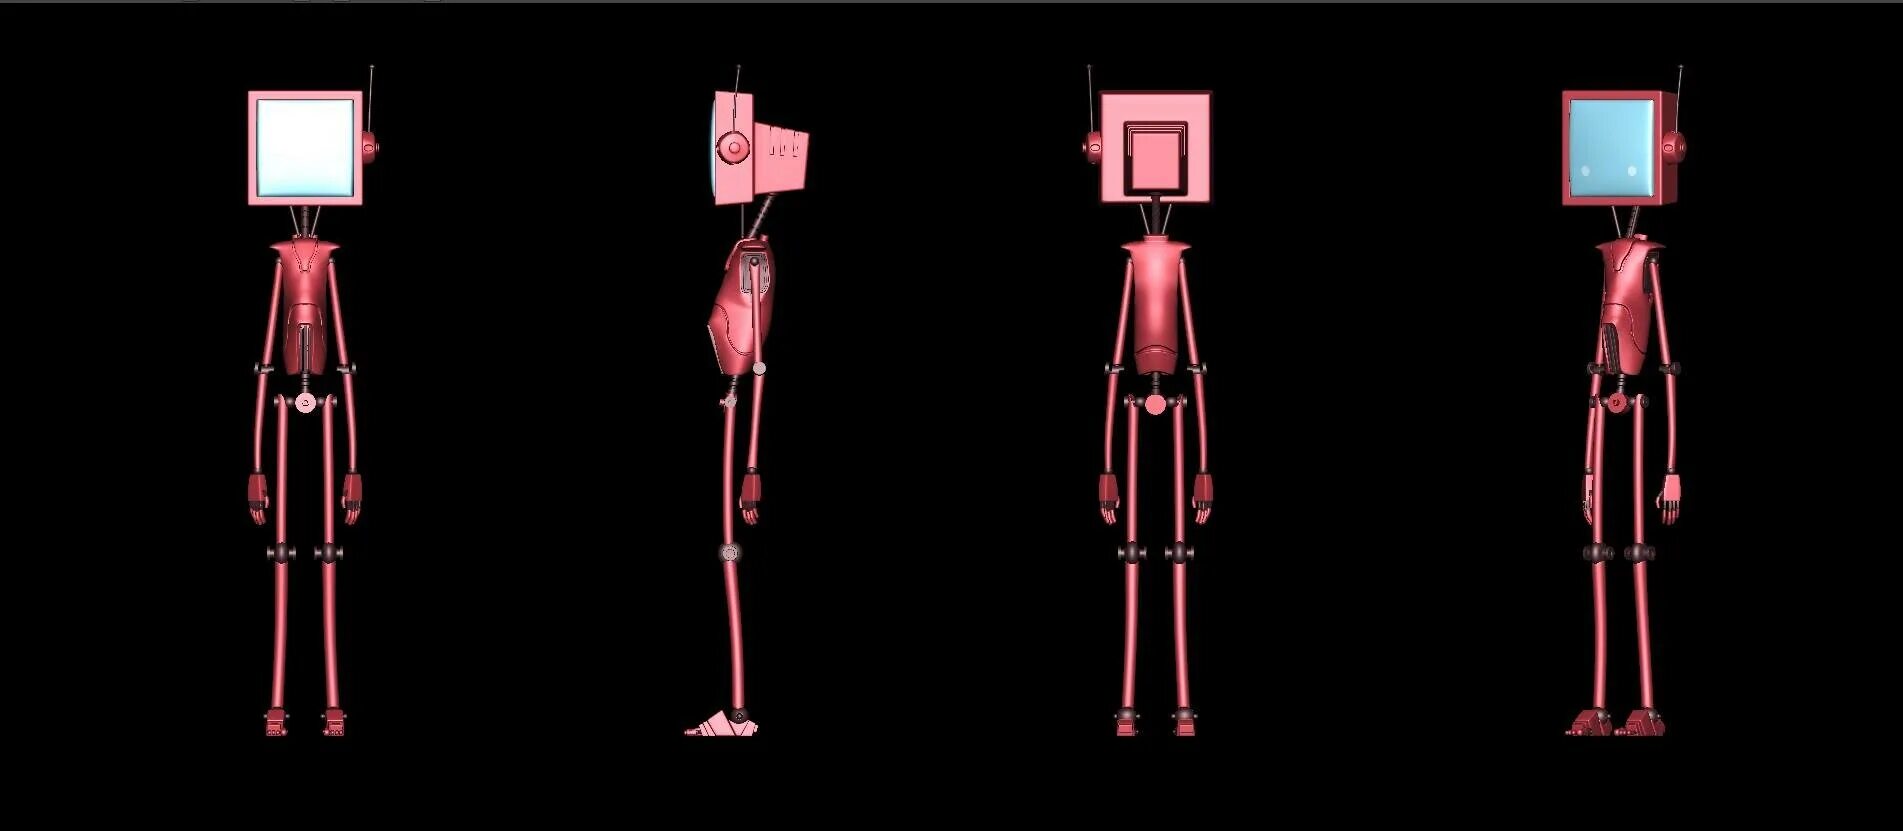 Robots tv. Робот телевизор. Робо телевизор. Робот телевизор арт. Персонаж робот с телевизором.